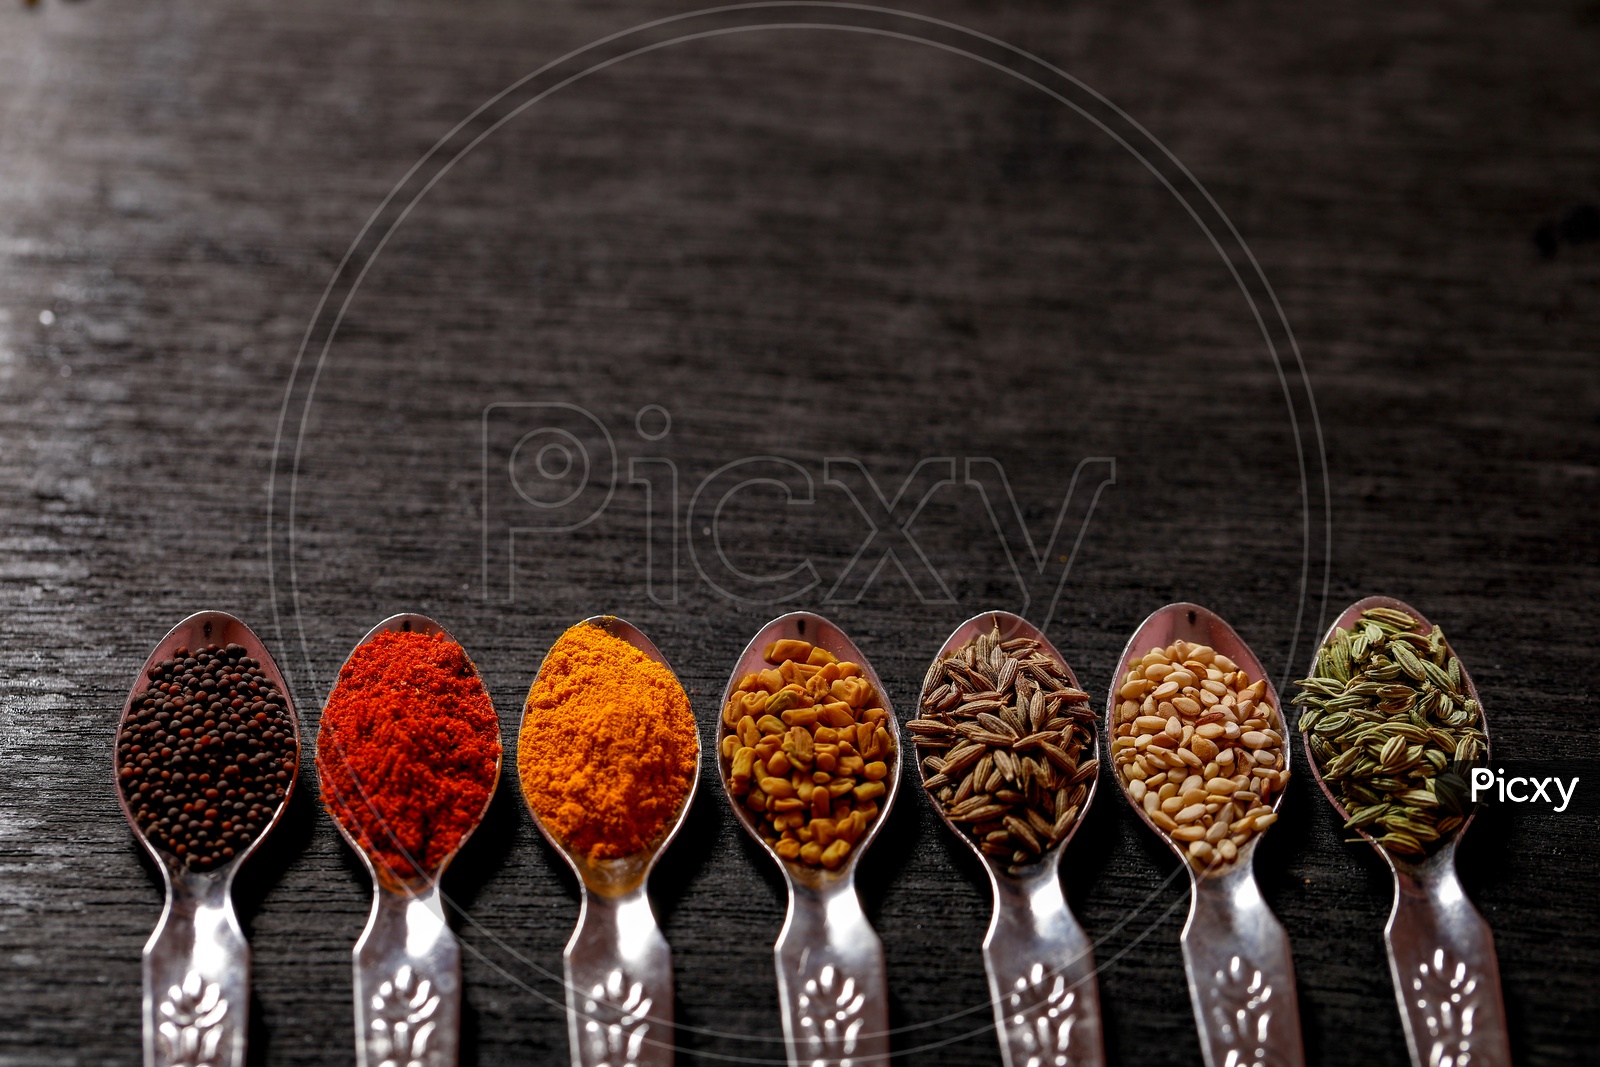 Black Mustard Seeds/avalu/Poppy Seed, Red Chilli Powder, Cumin/Jeera, Turmeric, Fenugreek/Methi/Menthi Seeds, Sesame Seeds, Fennel Seeds/Saunf - Indian Spices